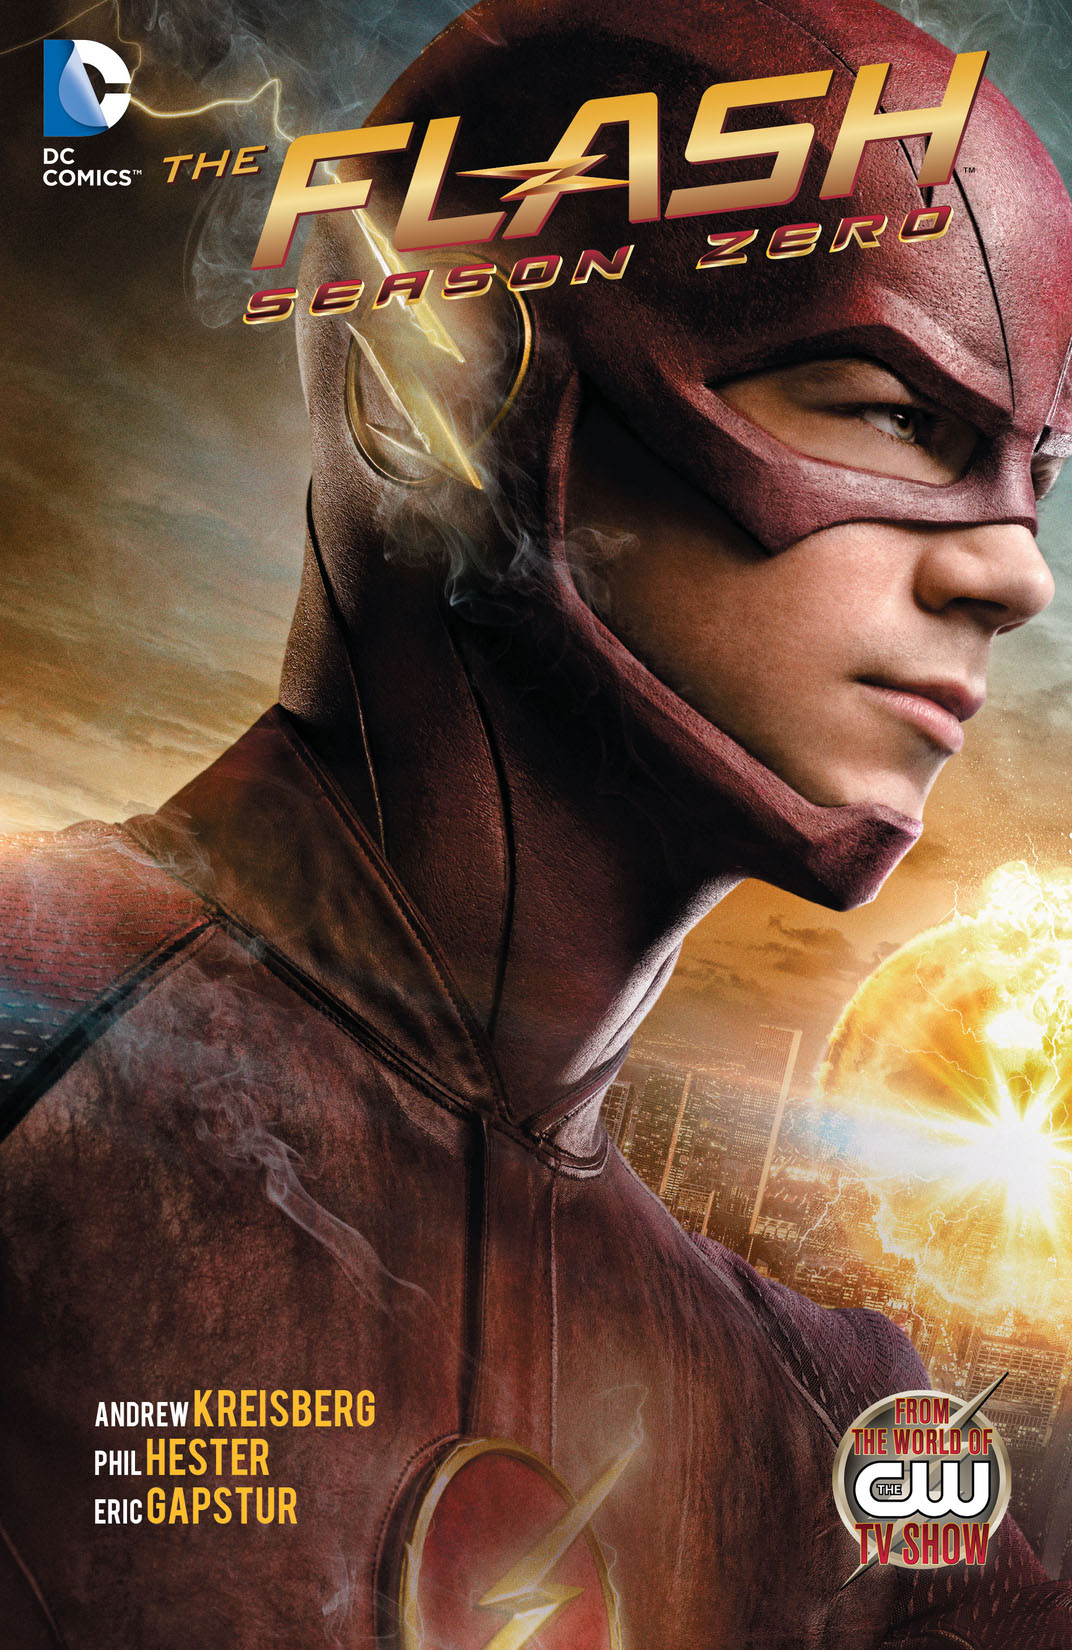 The Flash Season Zero preview images